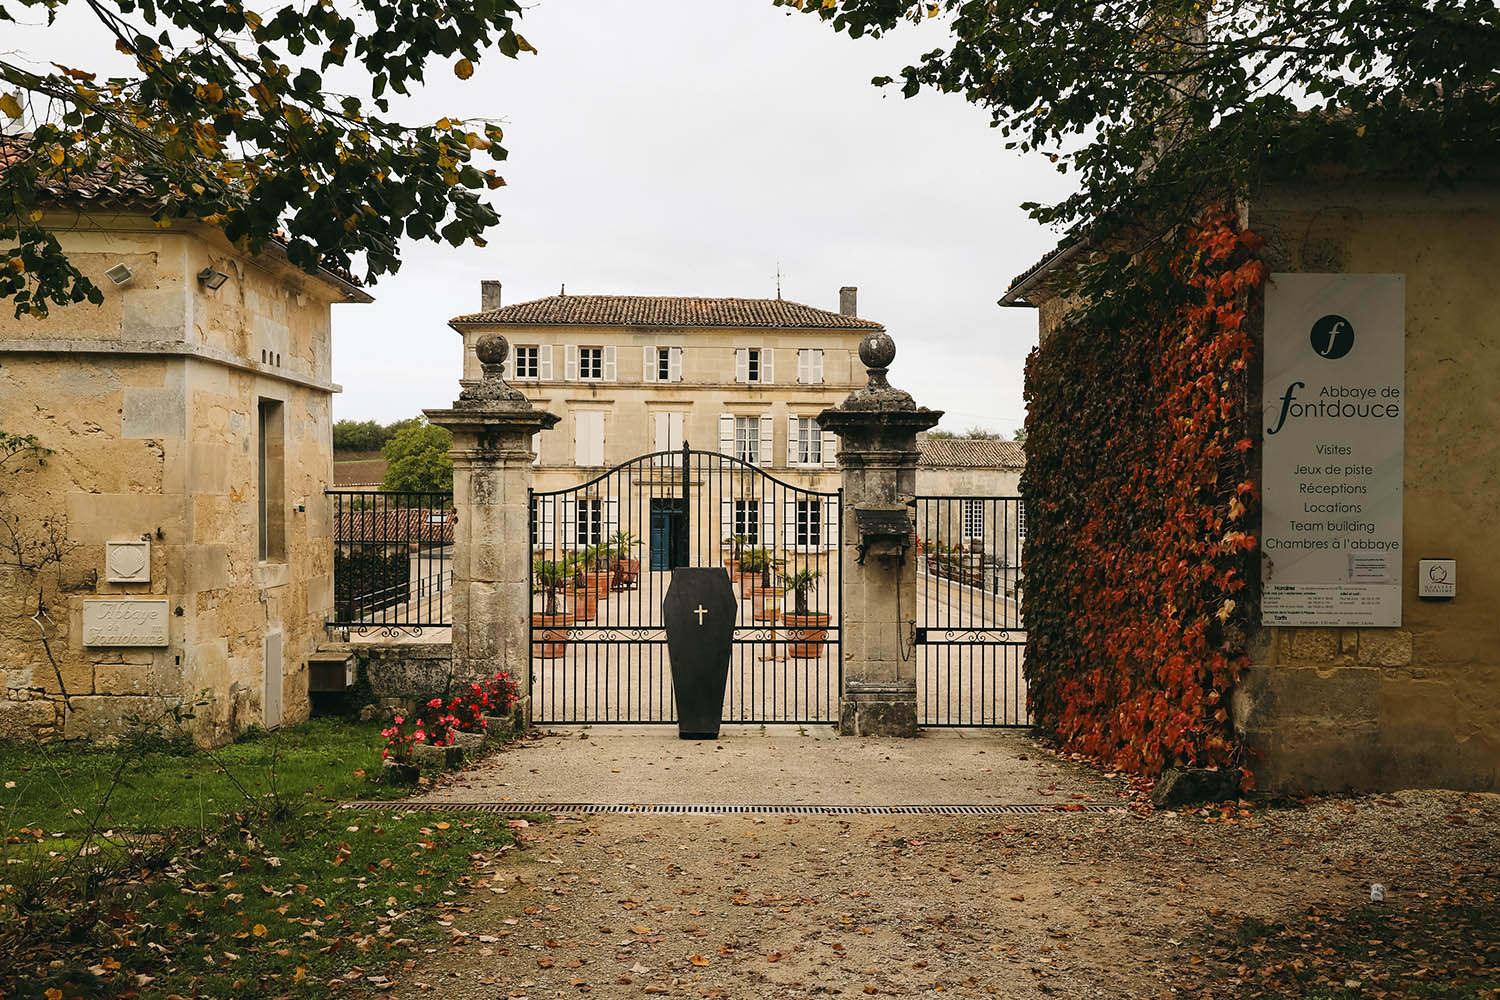 Visite Abbaye de Fontdouce